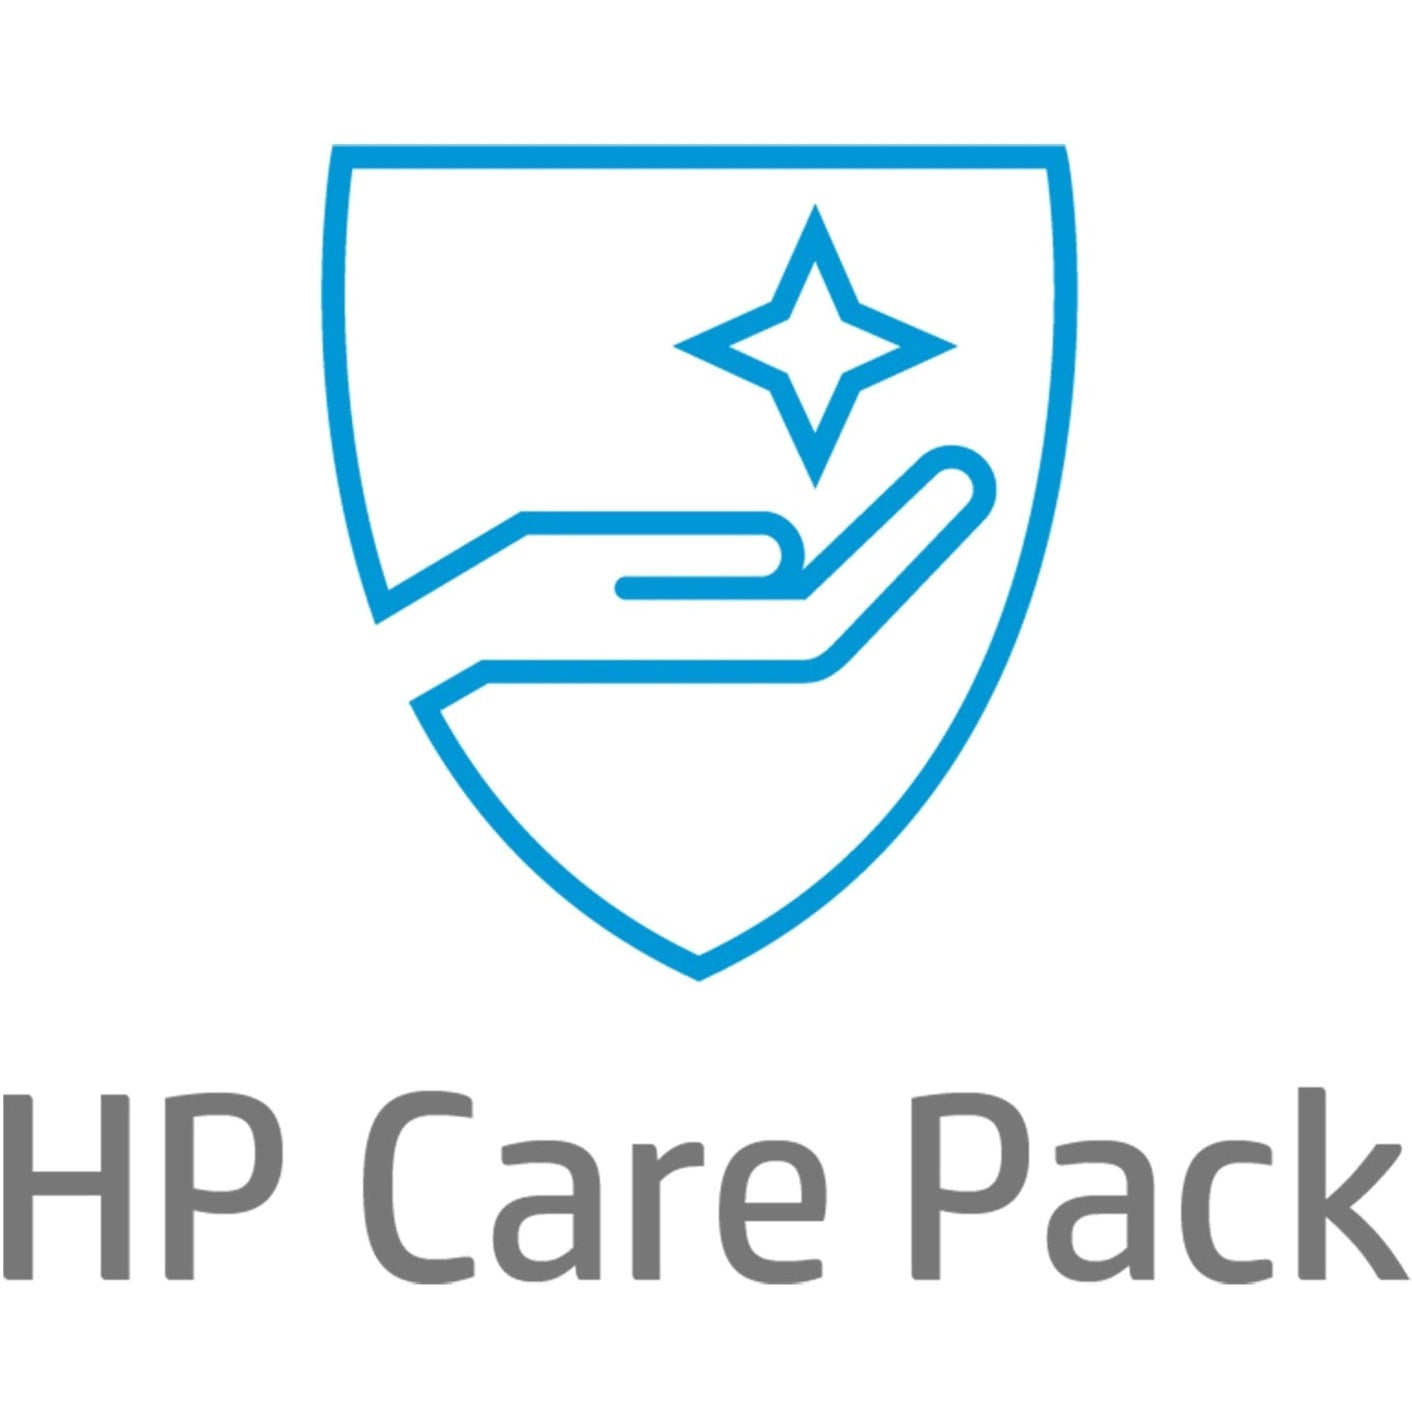 HP Care Pack - 1 Year - Warranty (U4416PE)